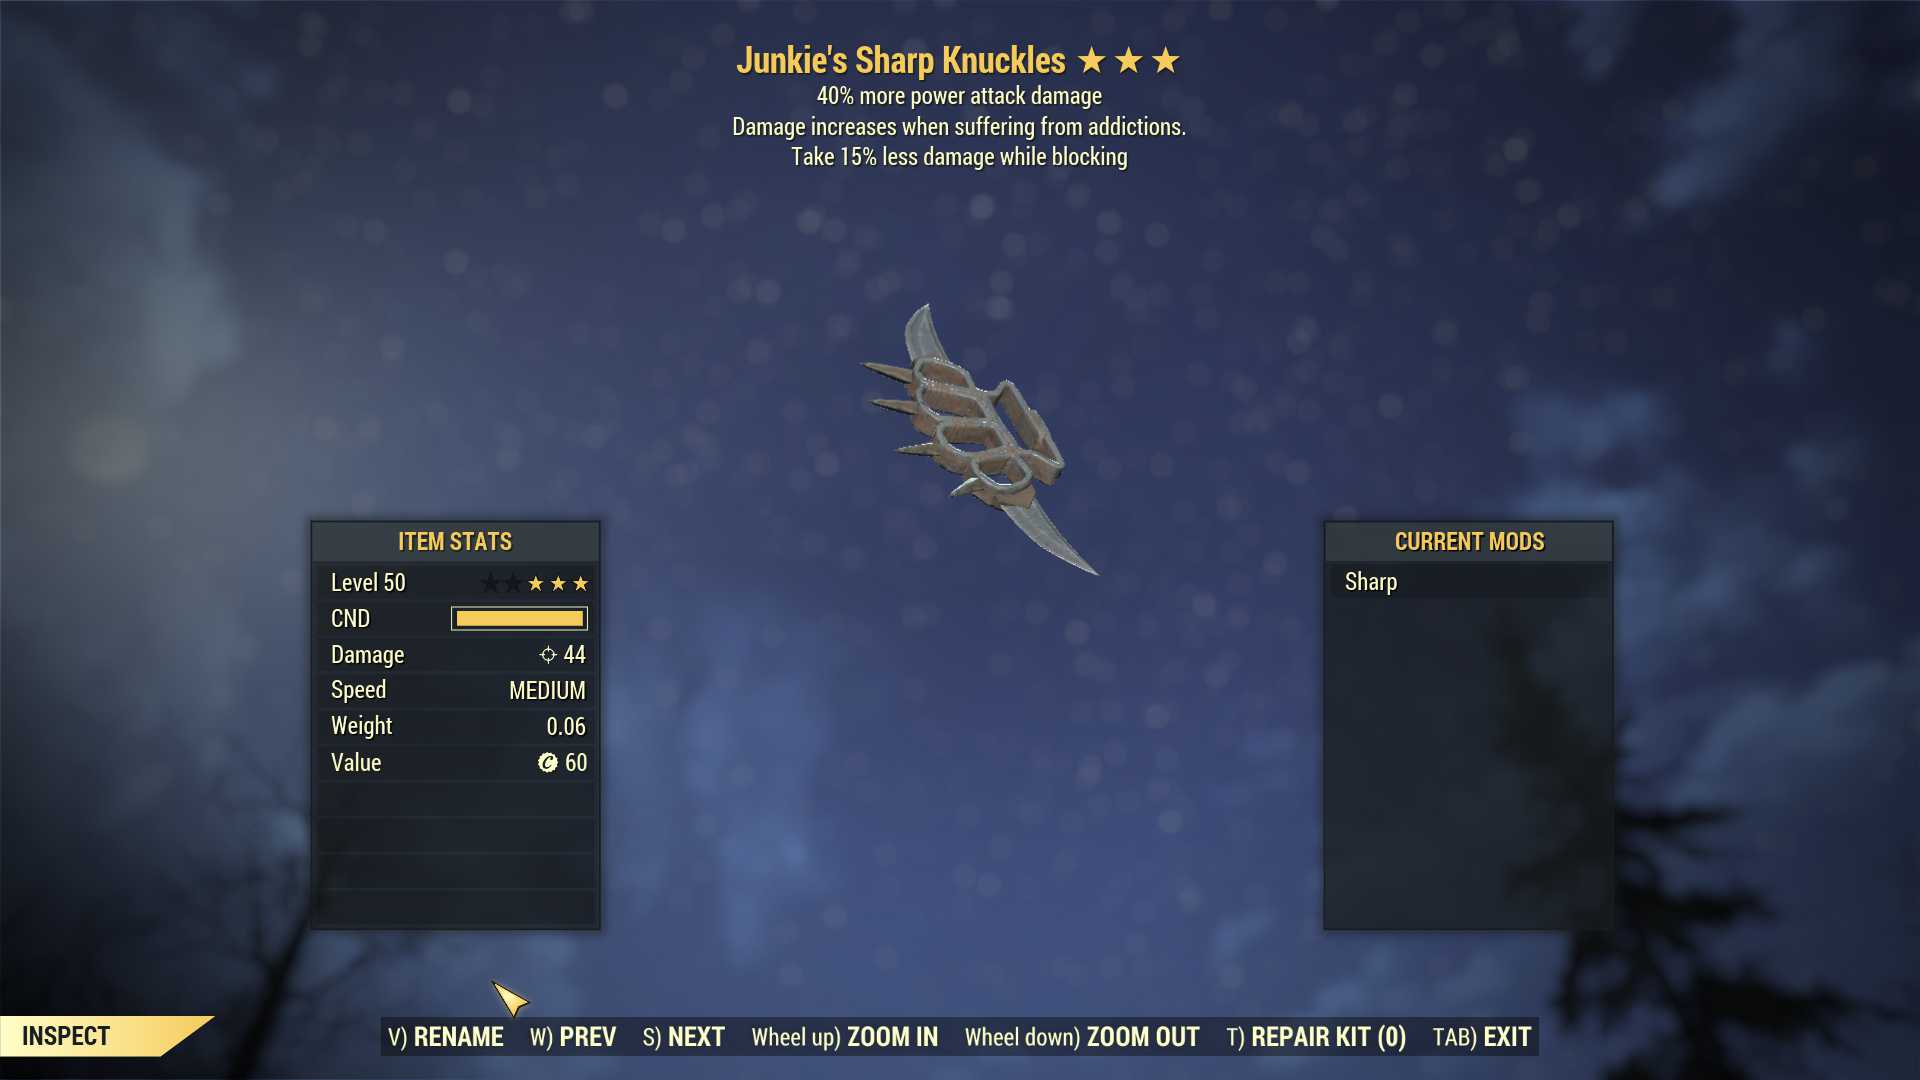 Junkie's Knuckles (+40% damage PA, Take 15% less damage WB)